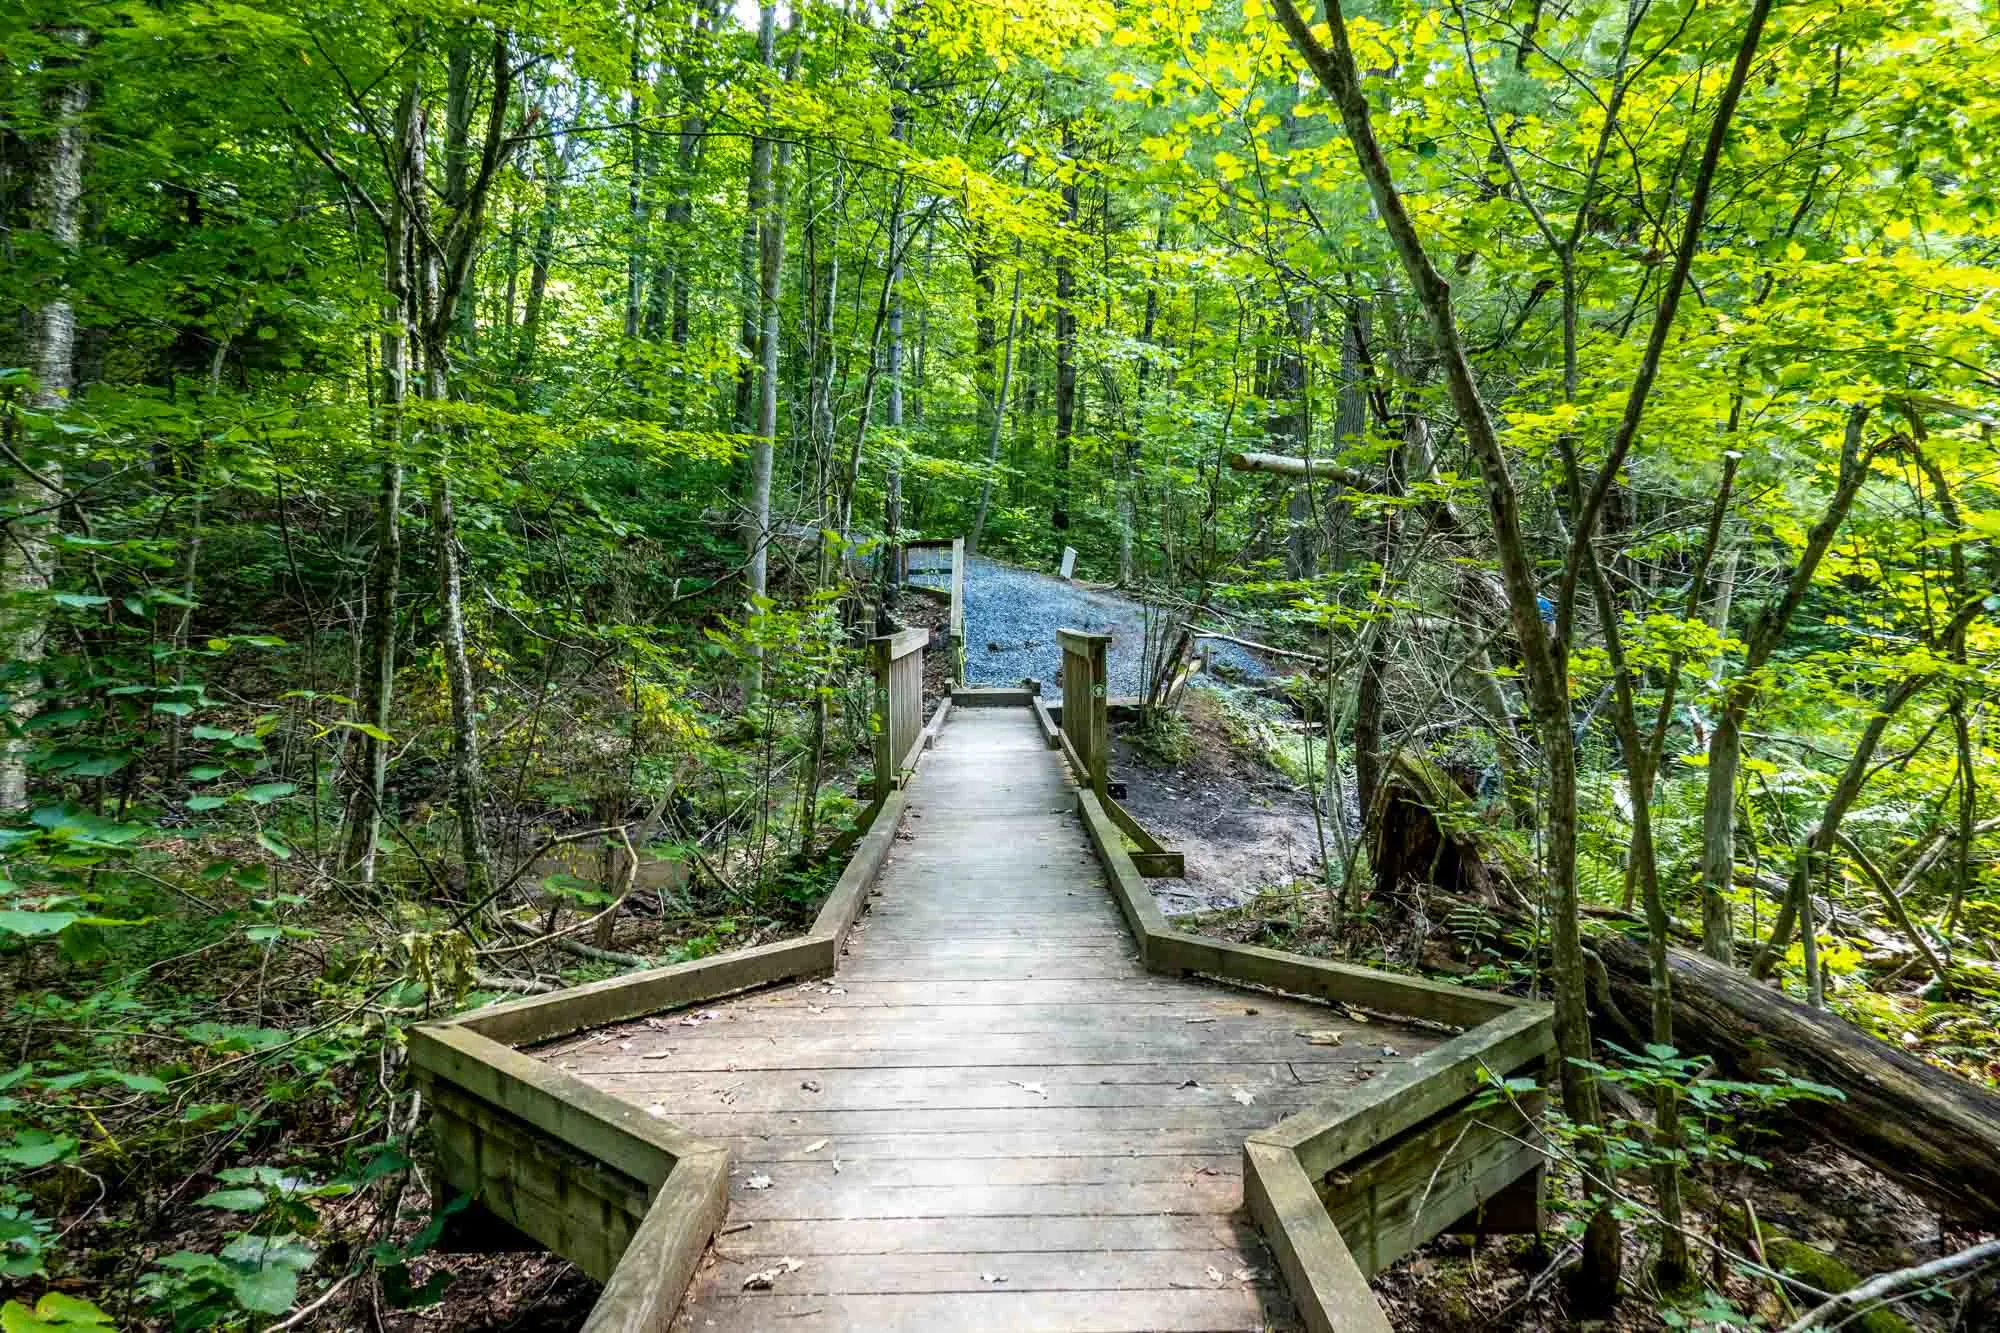 Wooden walkway through lush, green vegetation